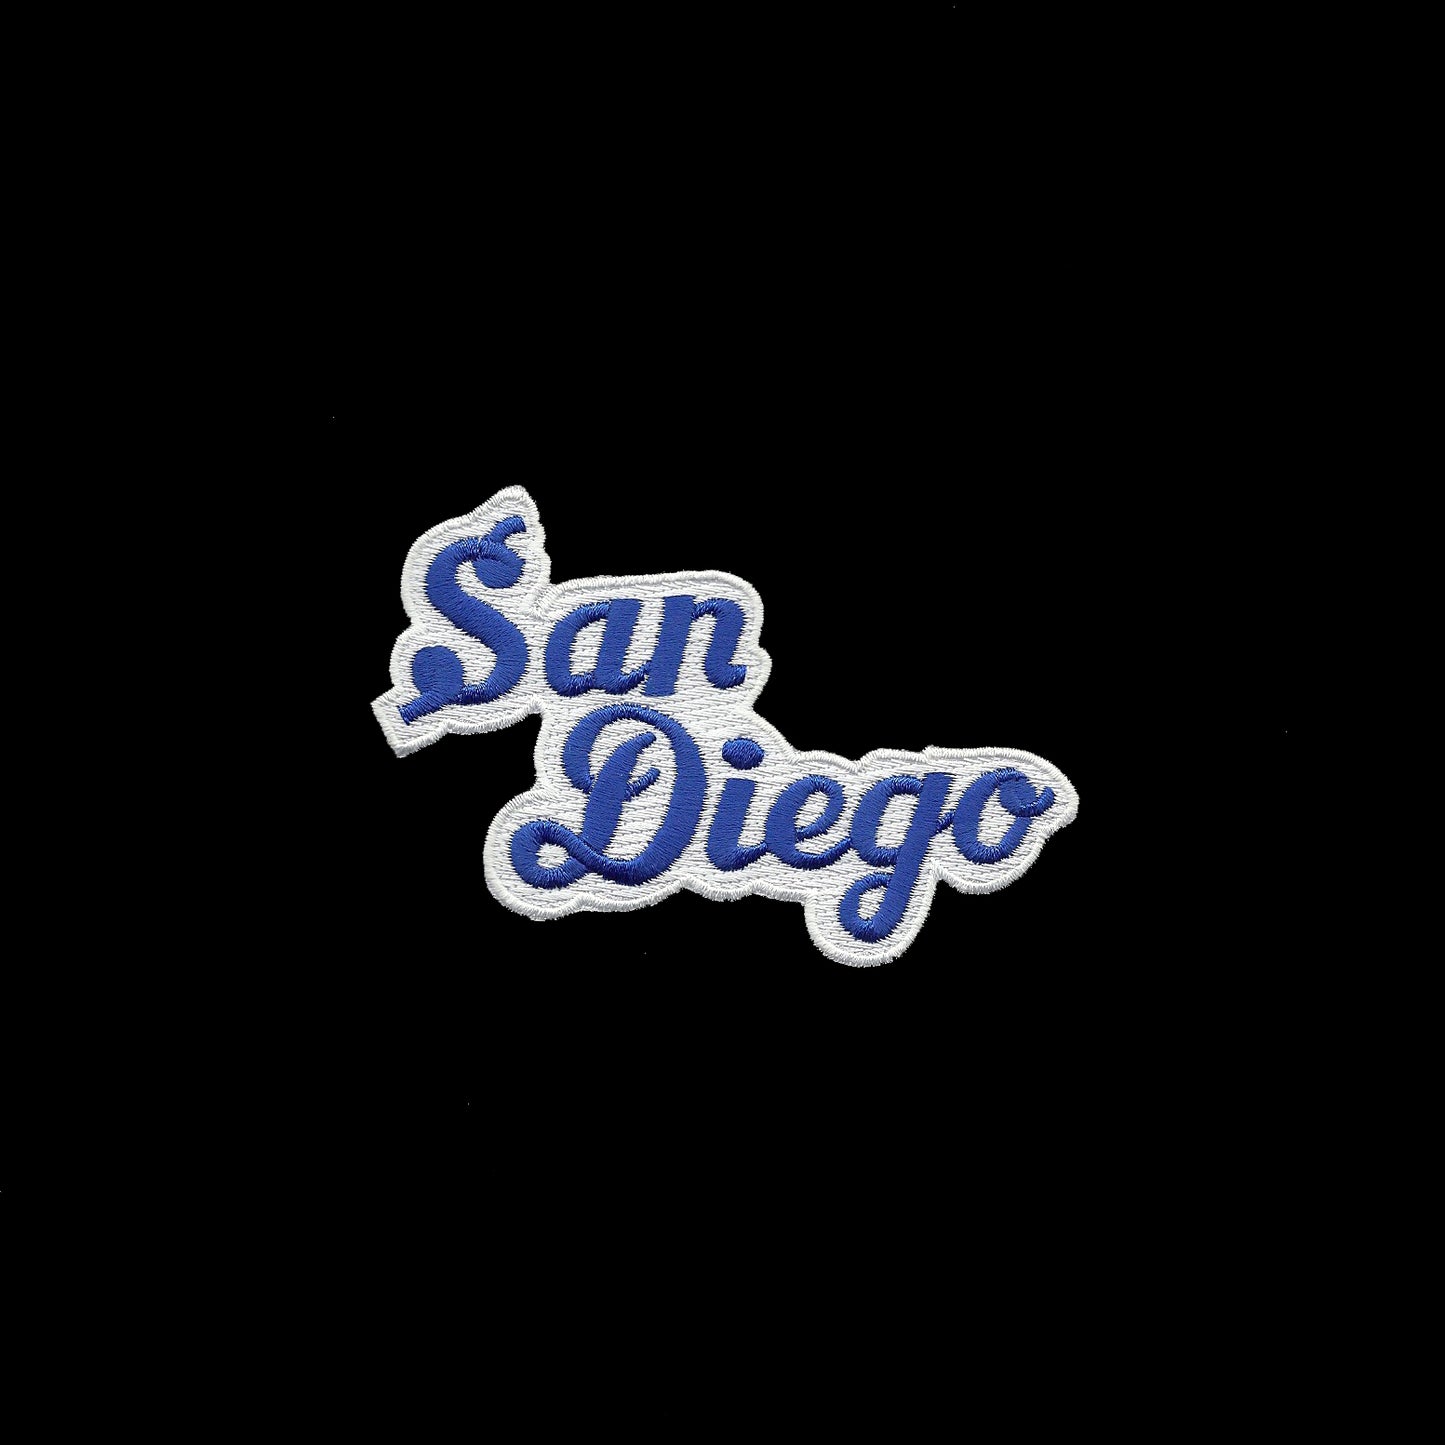 San Diego Patch - Script Blue and White - Iron On California Souvenir Badge Emblem